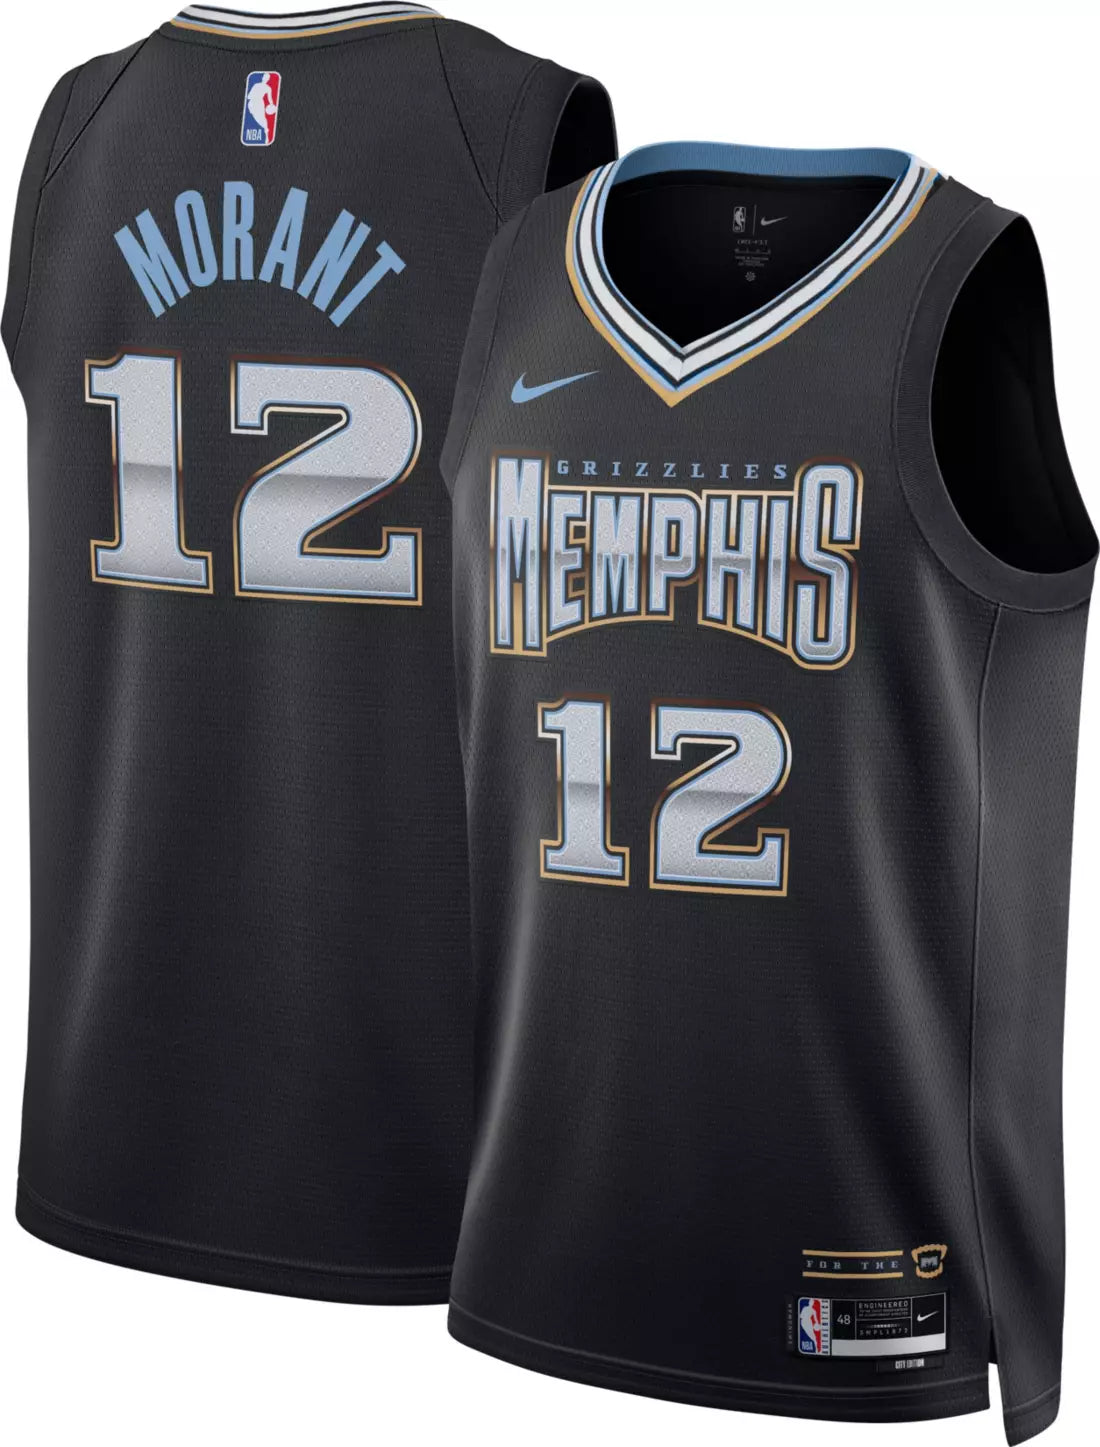 Adidas NBA Men's Memphis Grizzlies Authentic Blank Jersey, 60